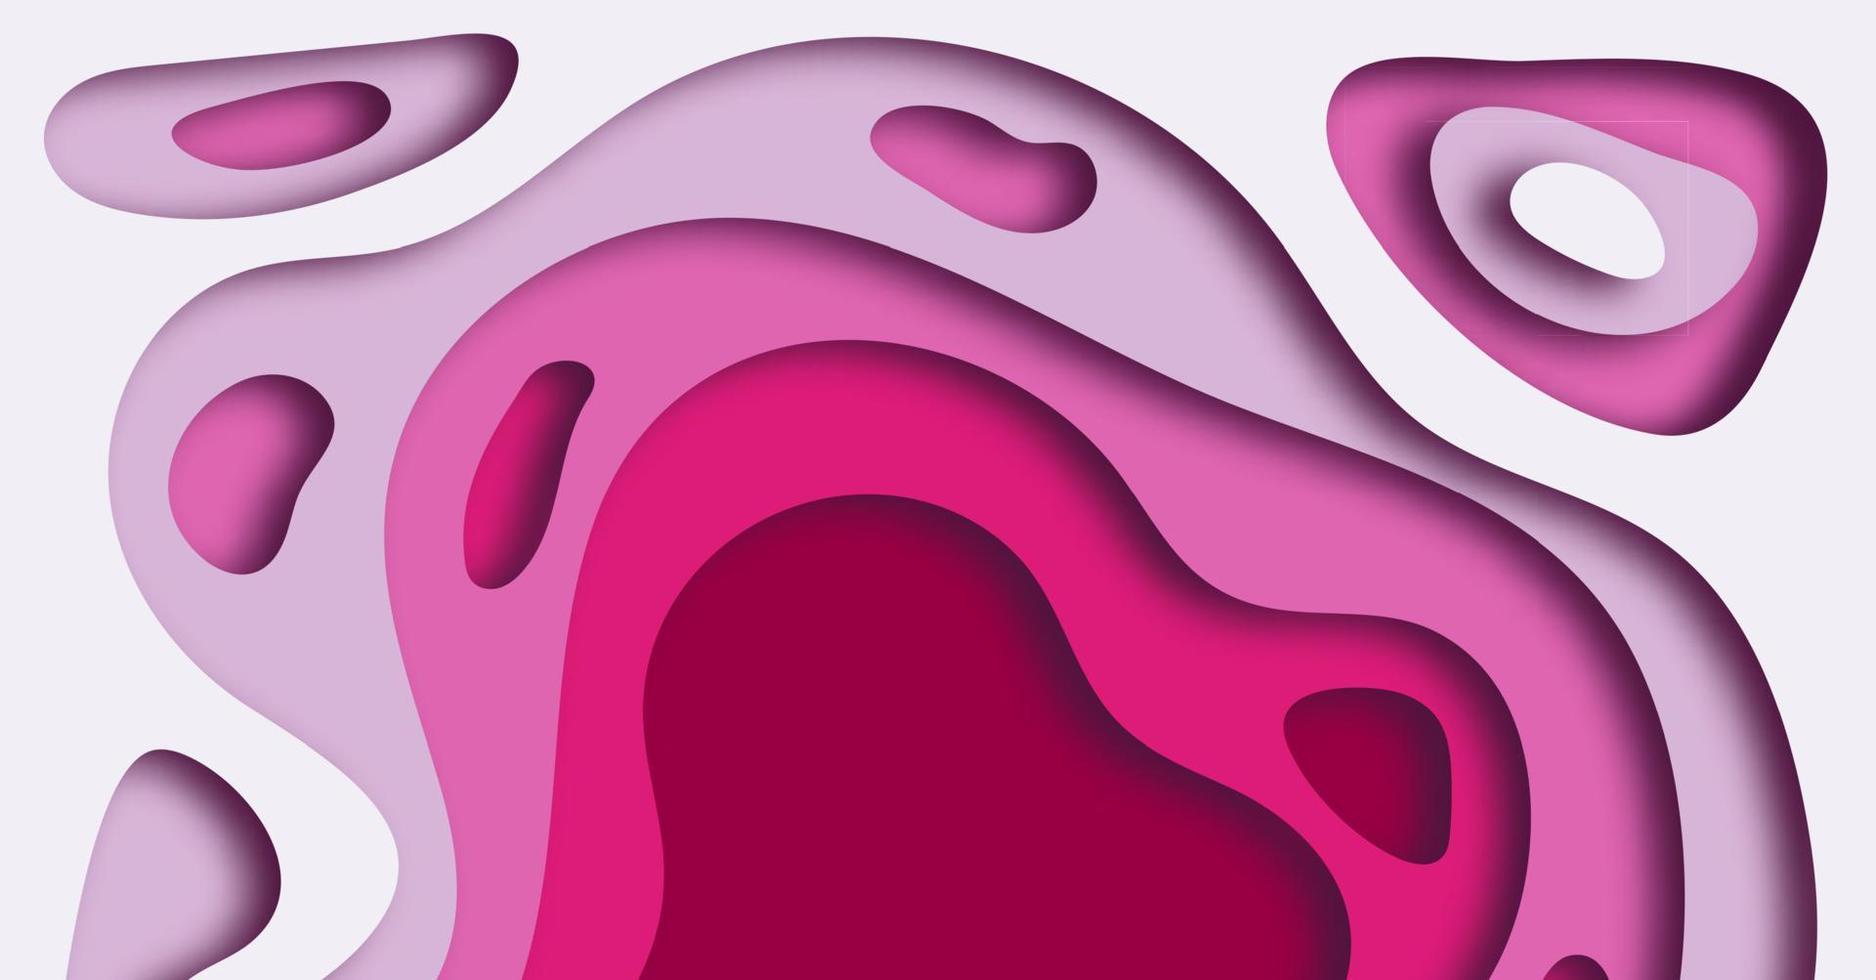 abstrakter hintergrund mit rosa papierschnittformen fahnendesign. Vektor-Illustration. vektor